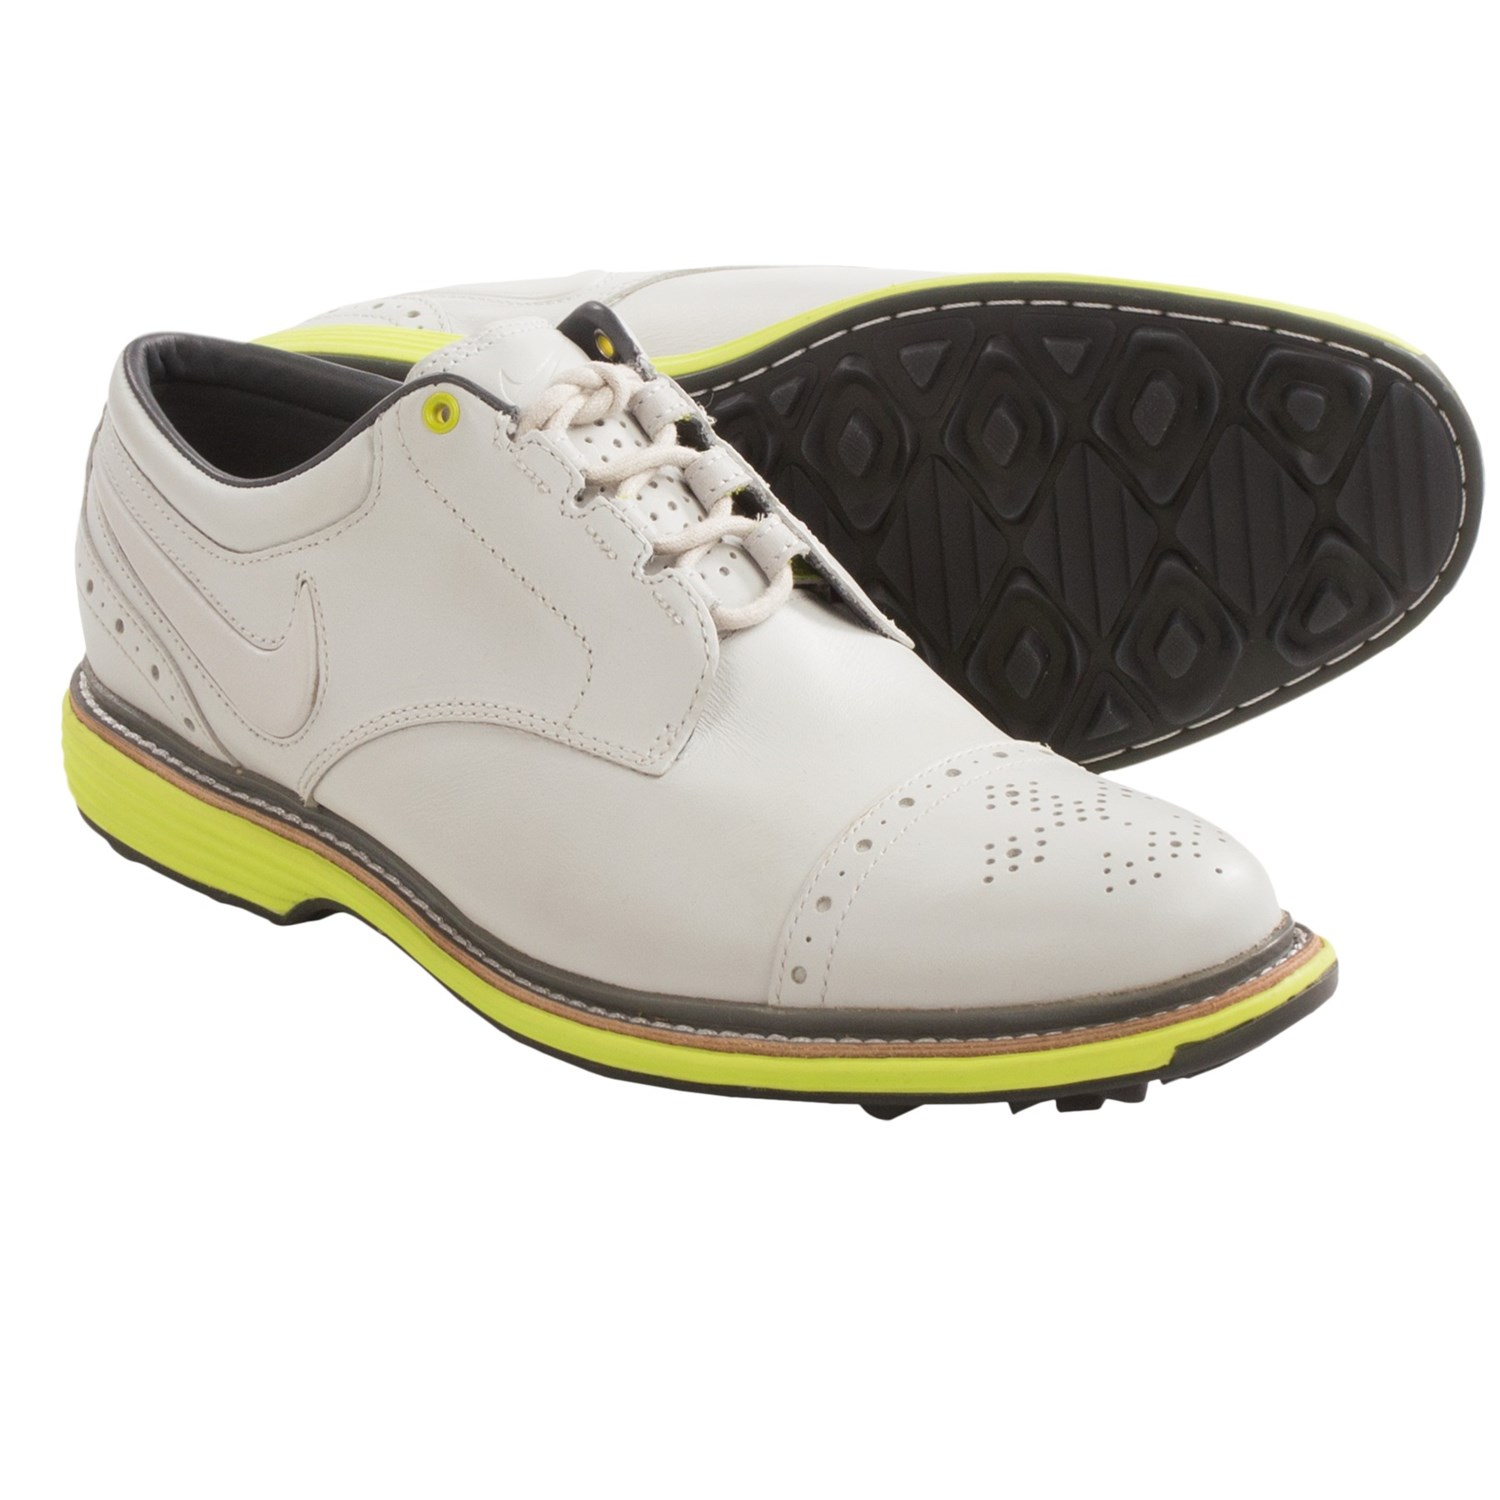 Nike Golf Shoes For Men 109